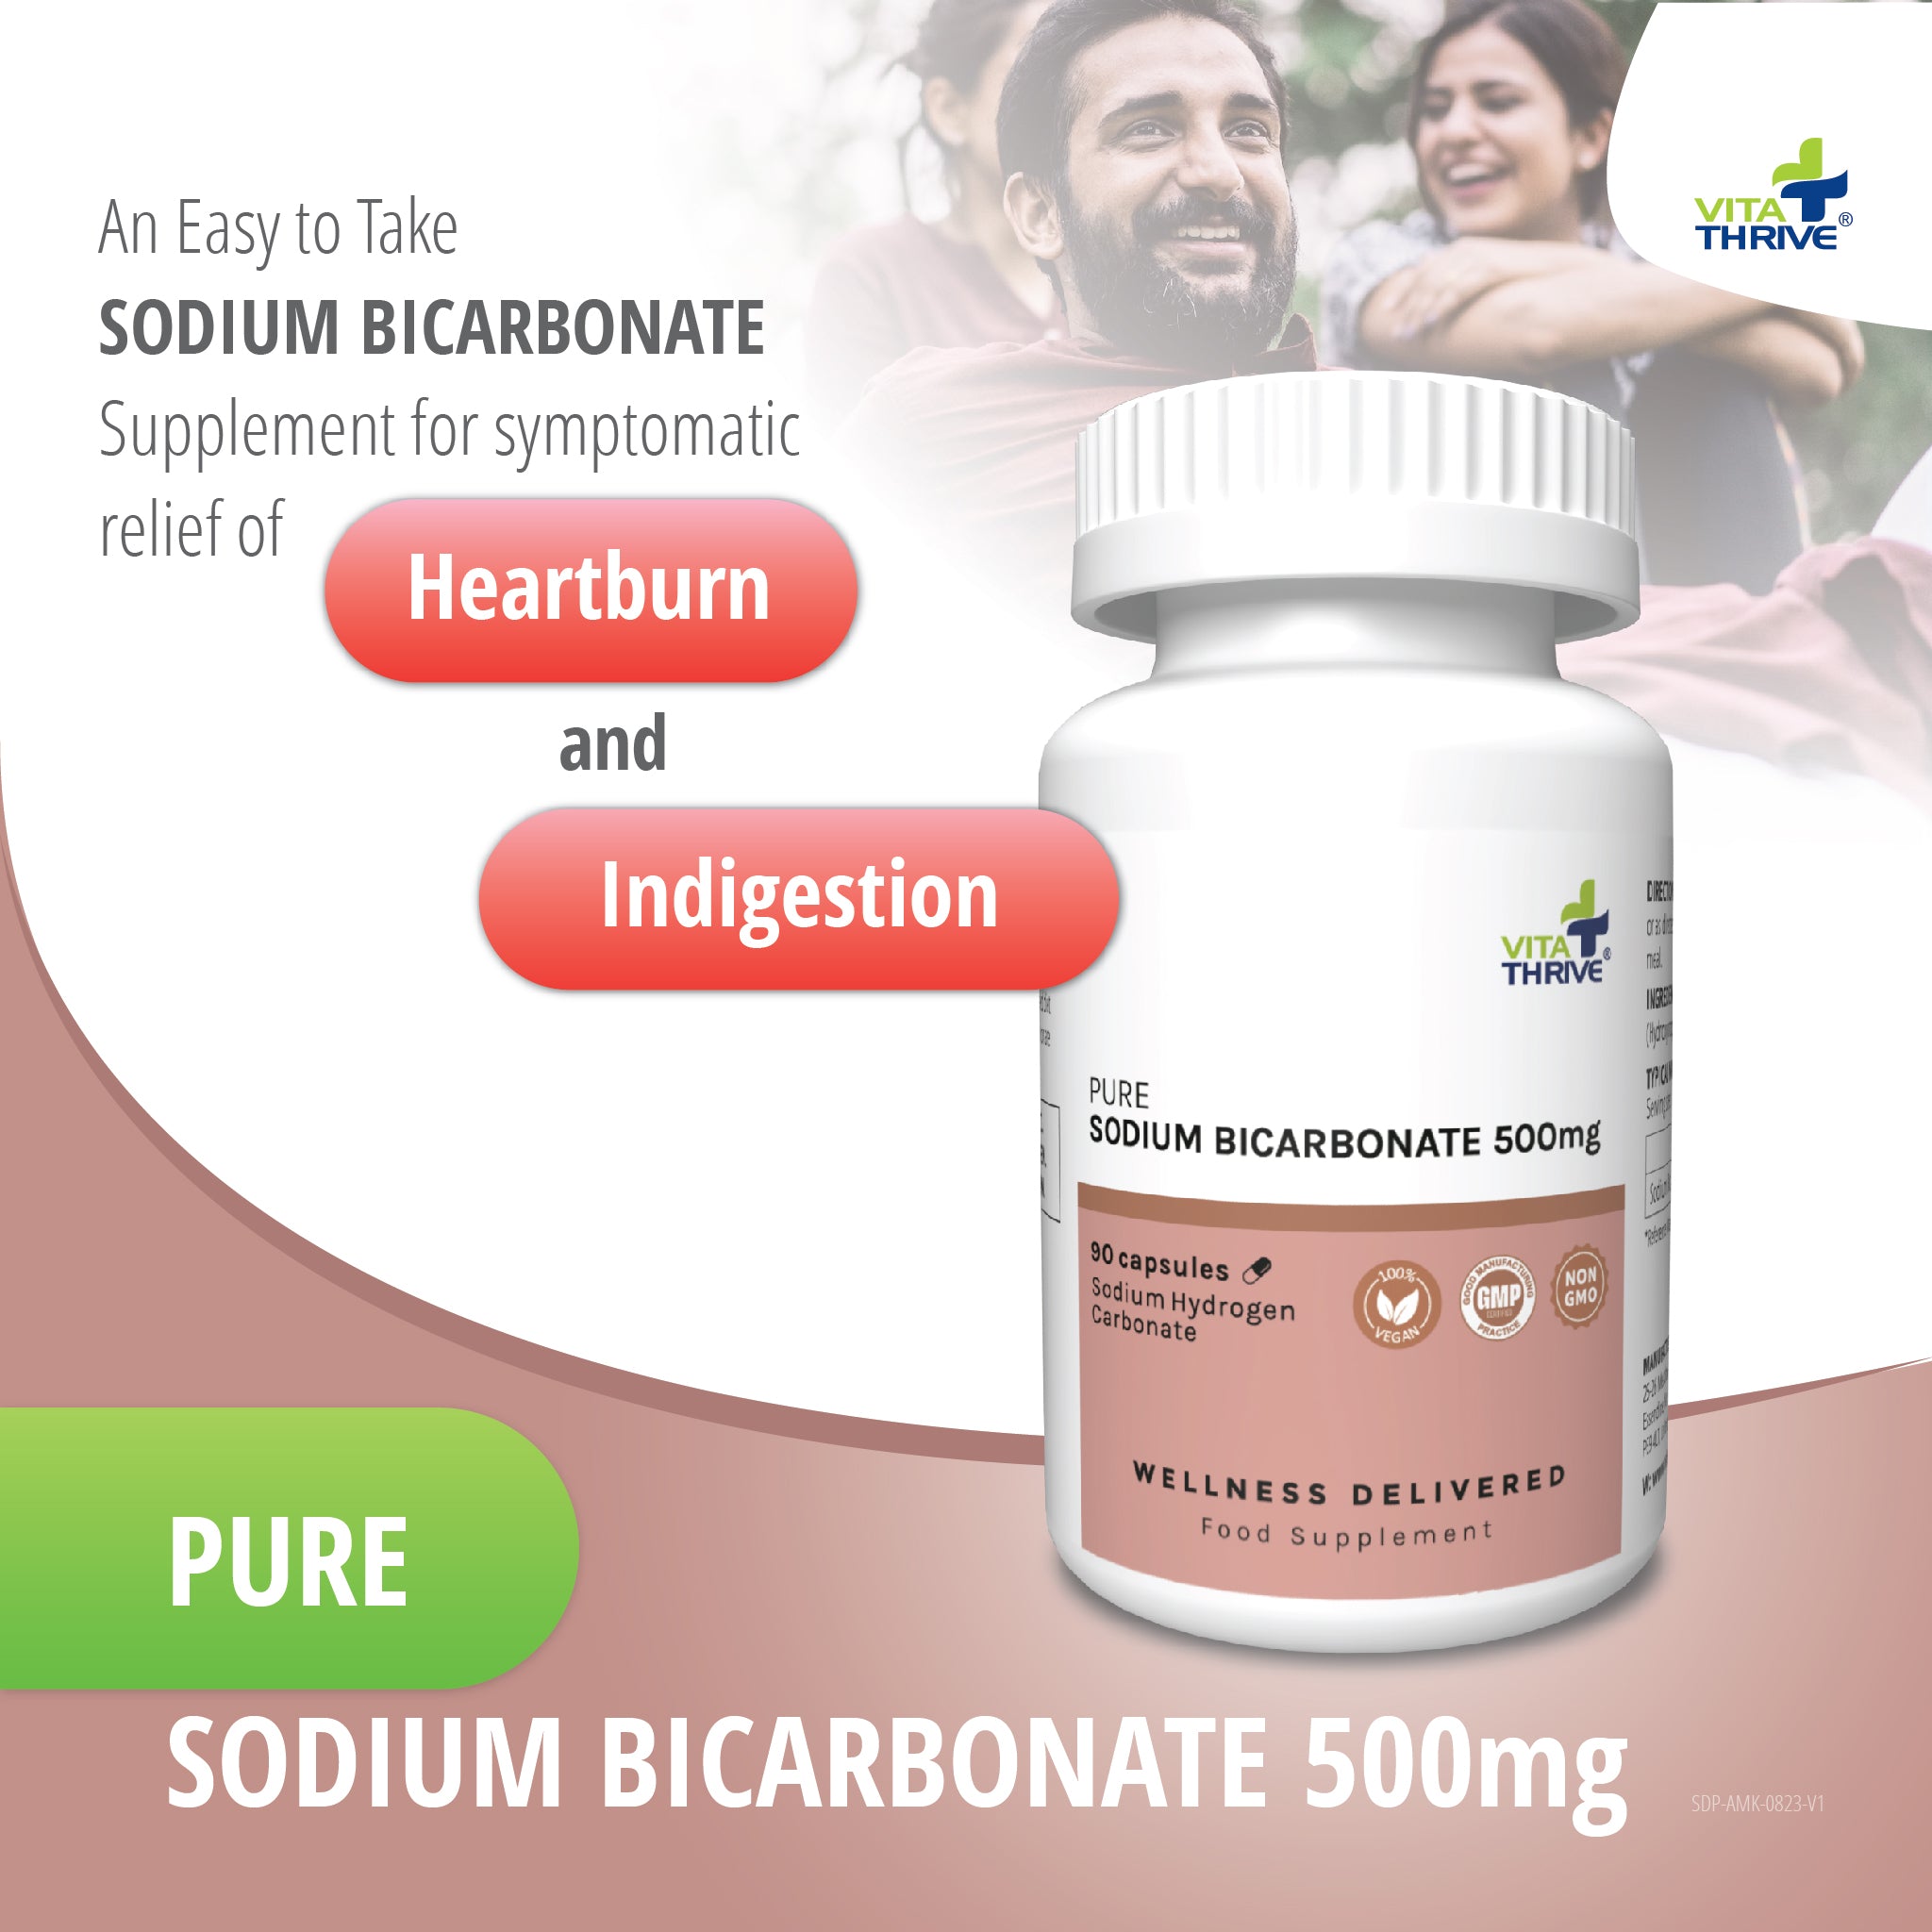 VitaThrive® Sodium Bicarbonate 500mg Capsules